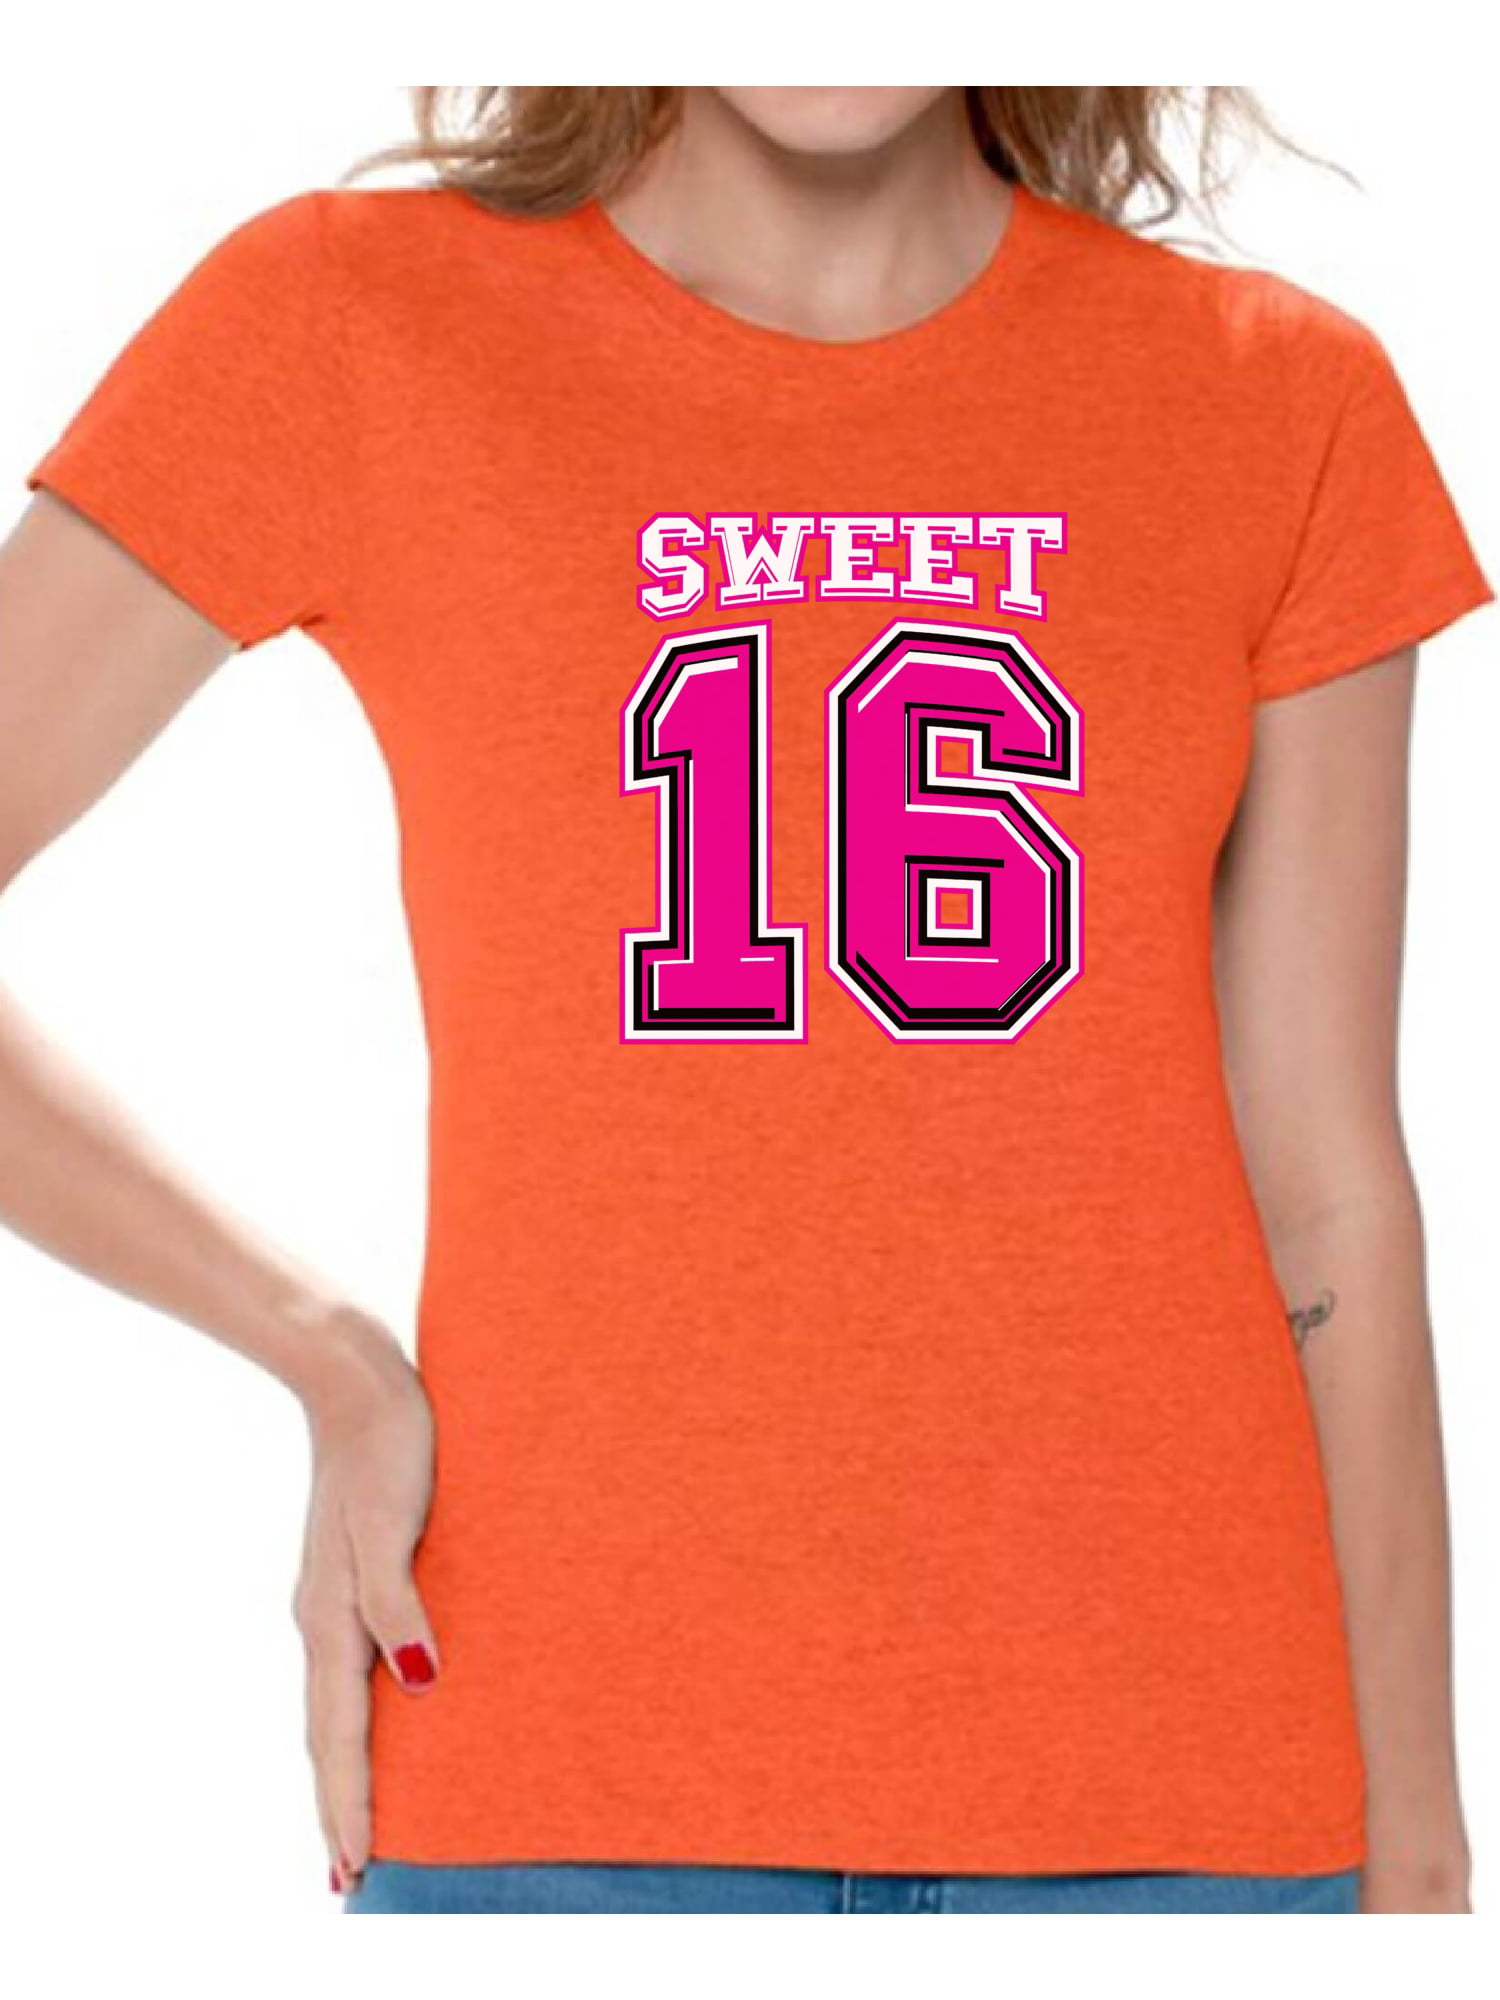 Birthday Shirt Sweet Sixteen Shirt Shirt for Teenager Active 16th Bday Shirt